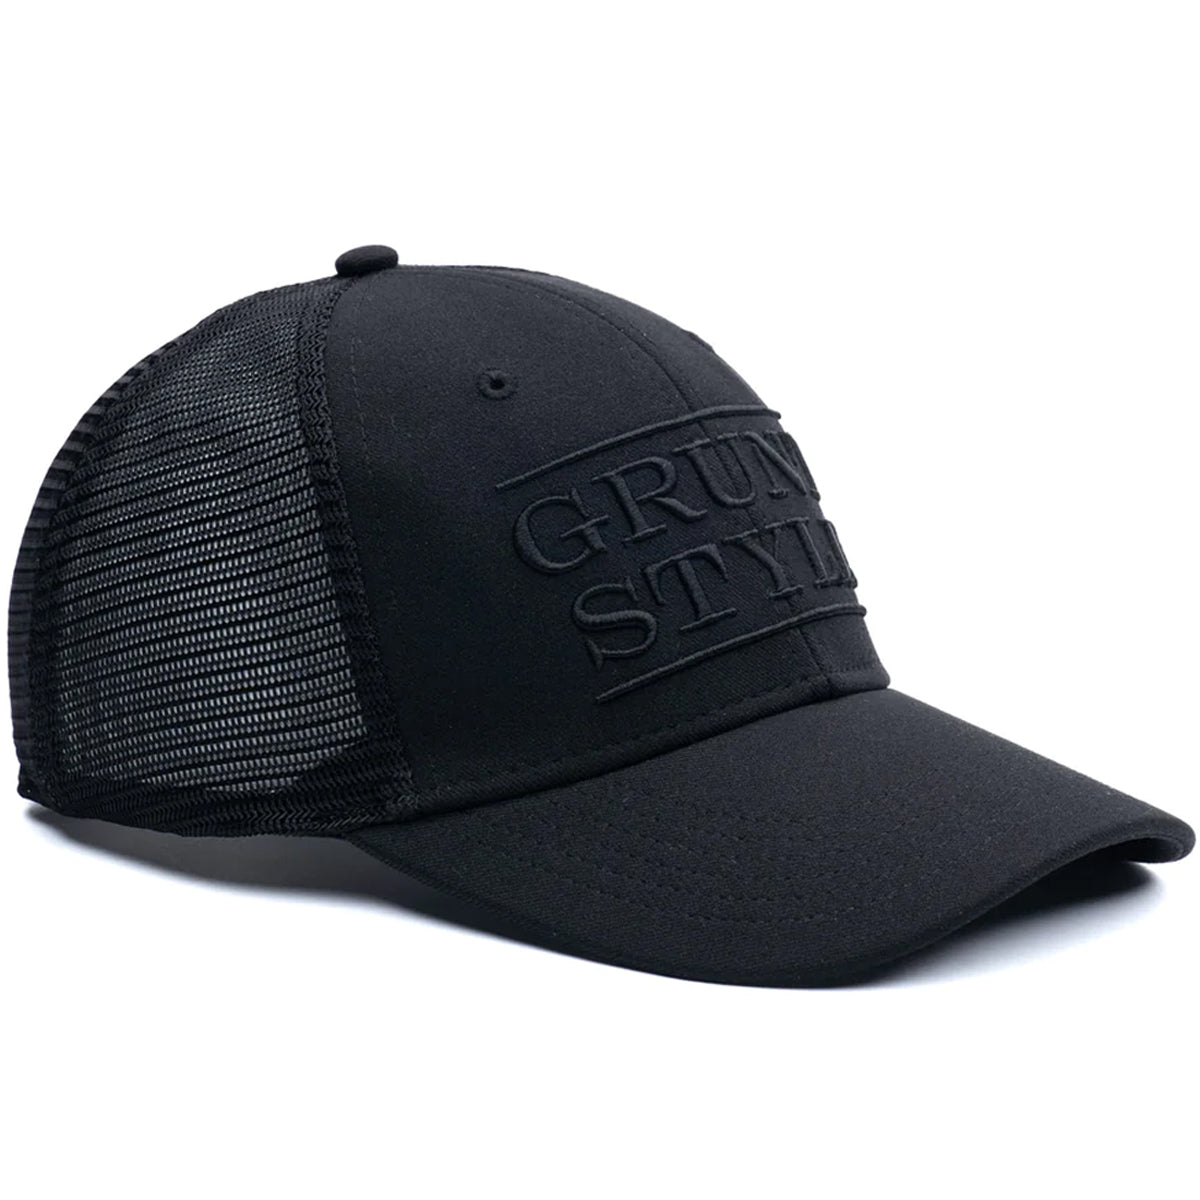 Grunt Style Stacked Logo Trucker Hat Grunt Style